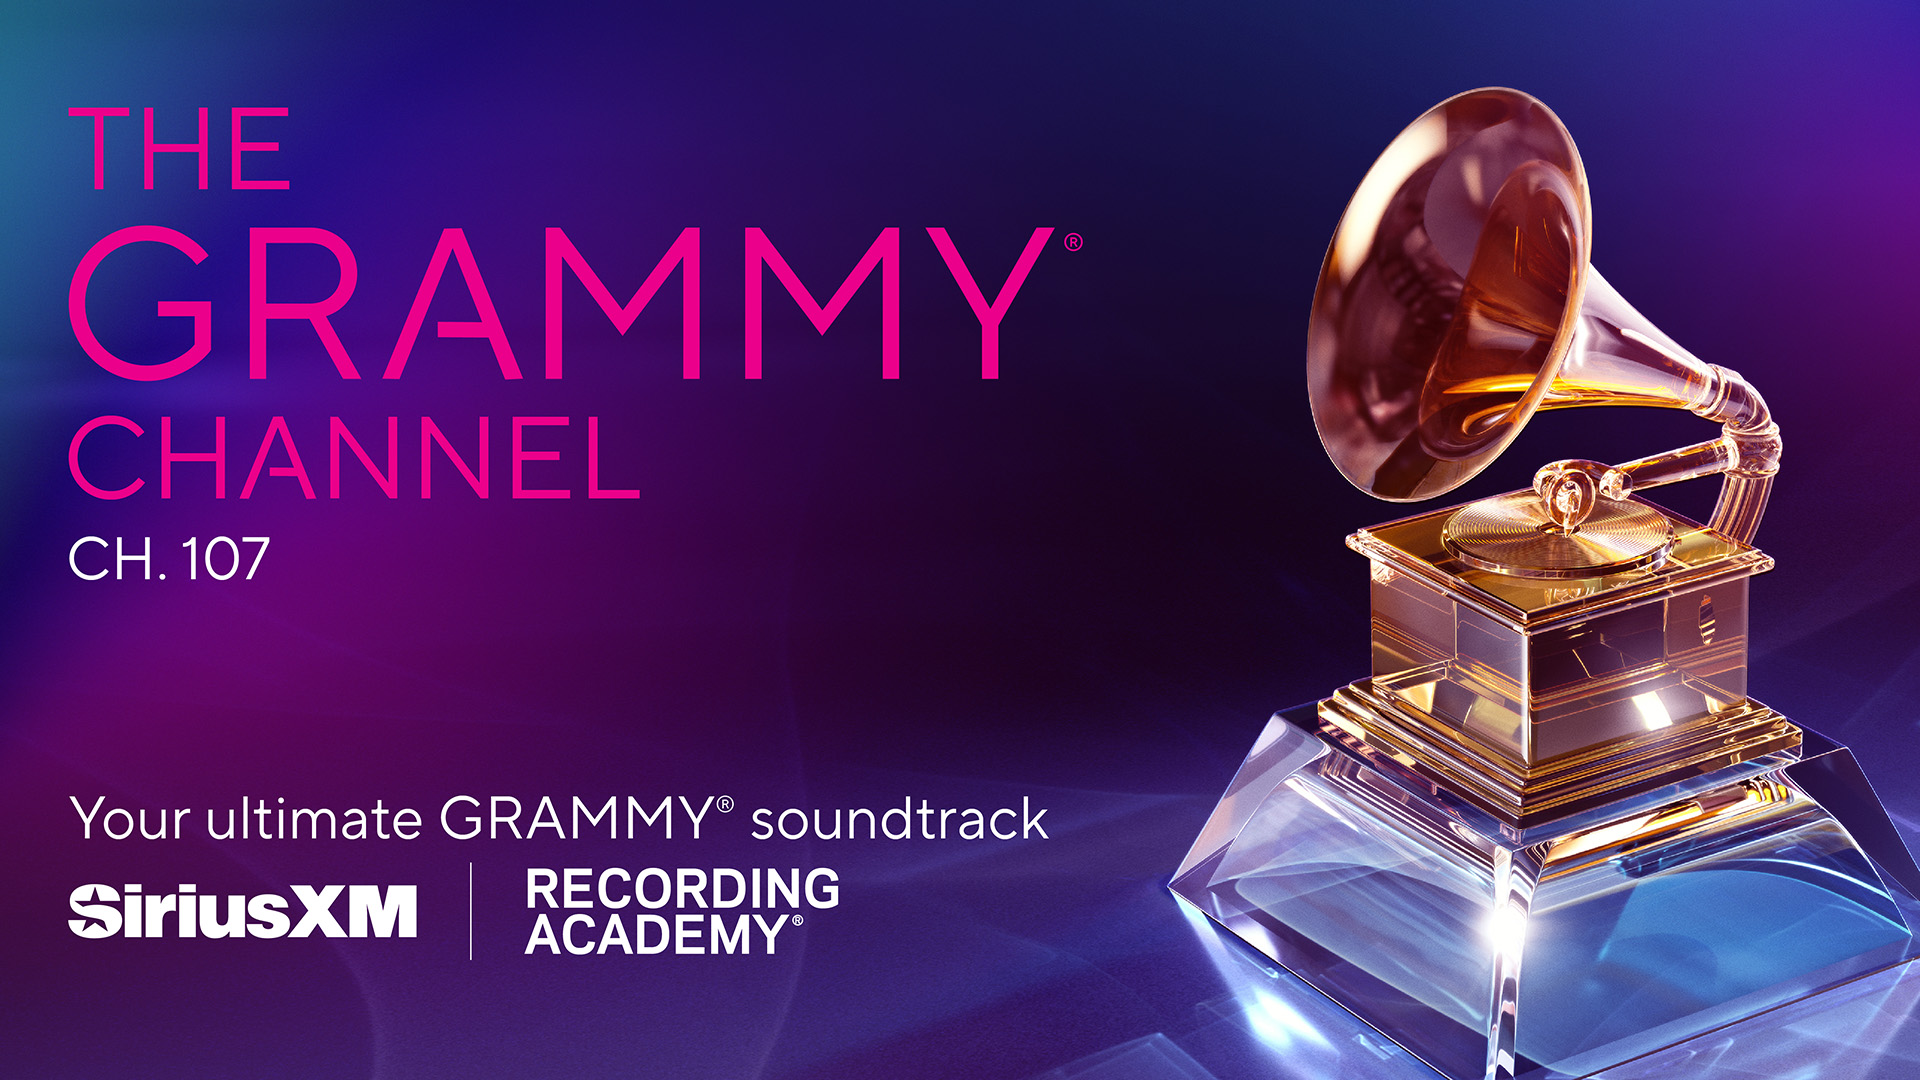 The Grammy Channel on SiriusXM Ch. 107